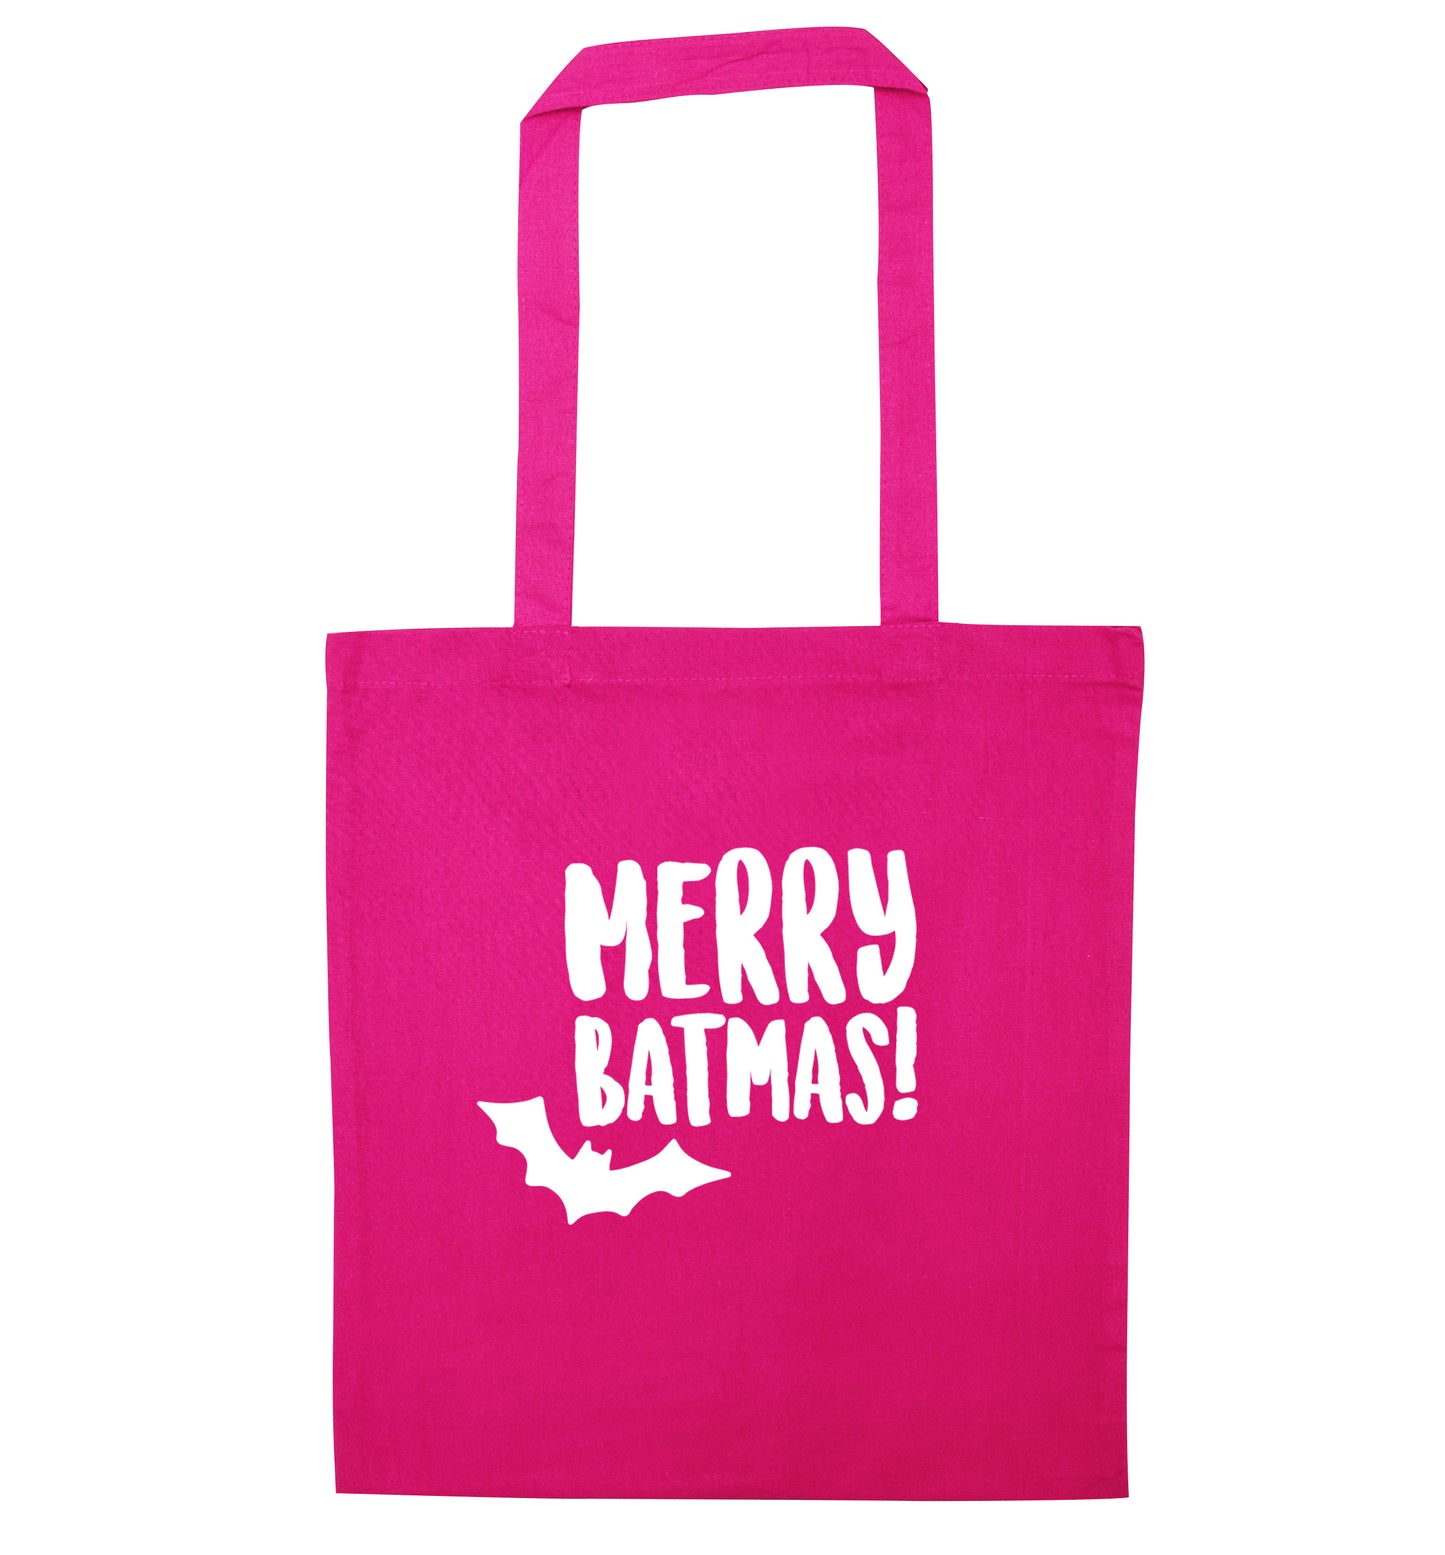 Merry Batmas pink tote bag